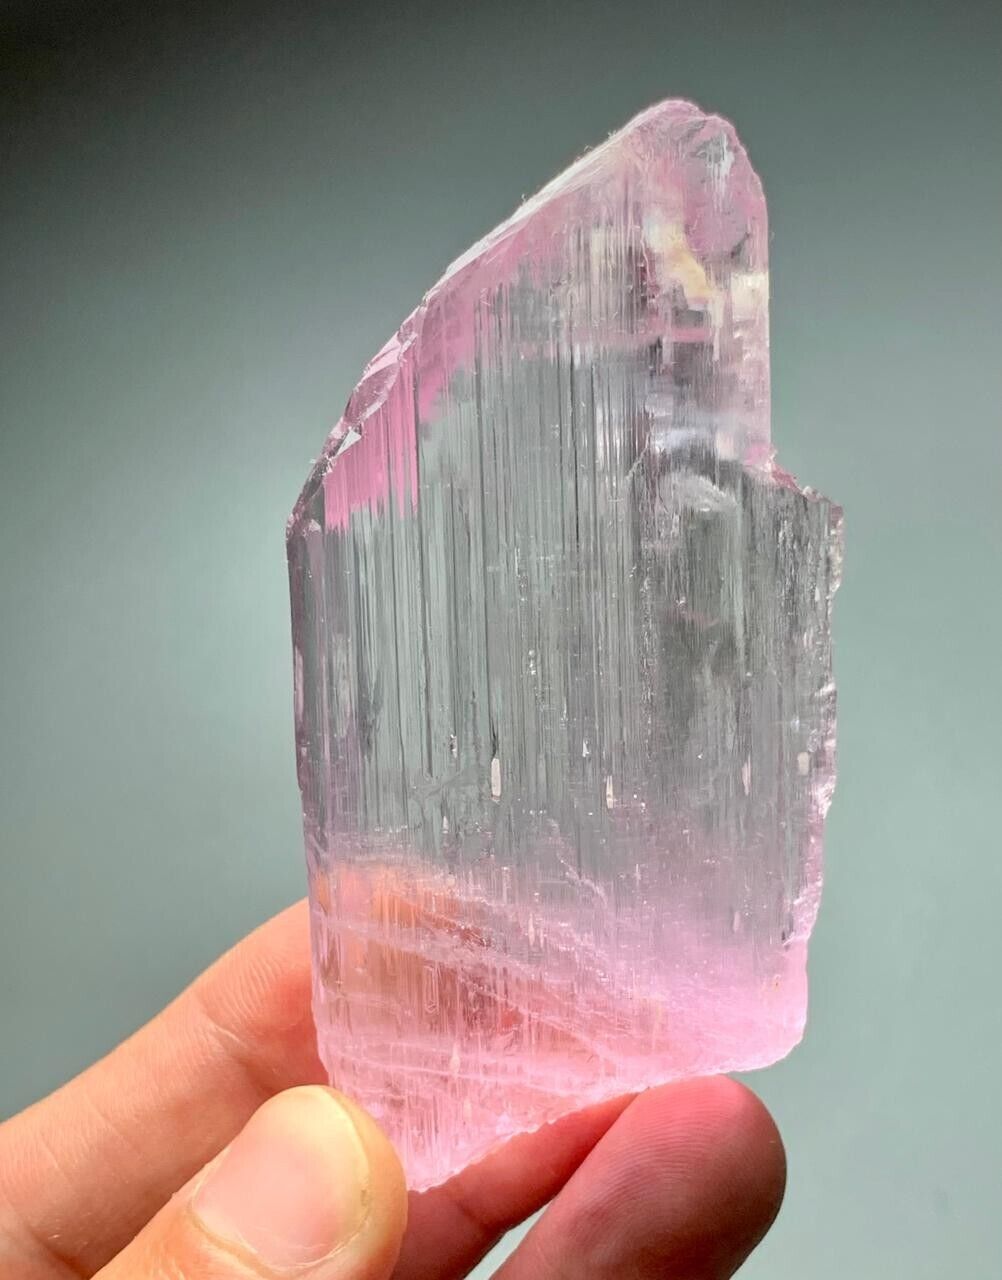 500 Carat Kunzite Crystal From Afghanistan